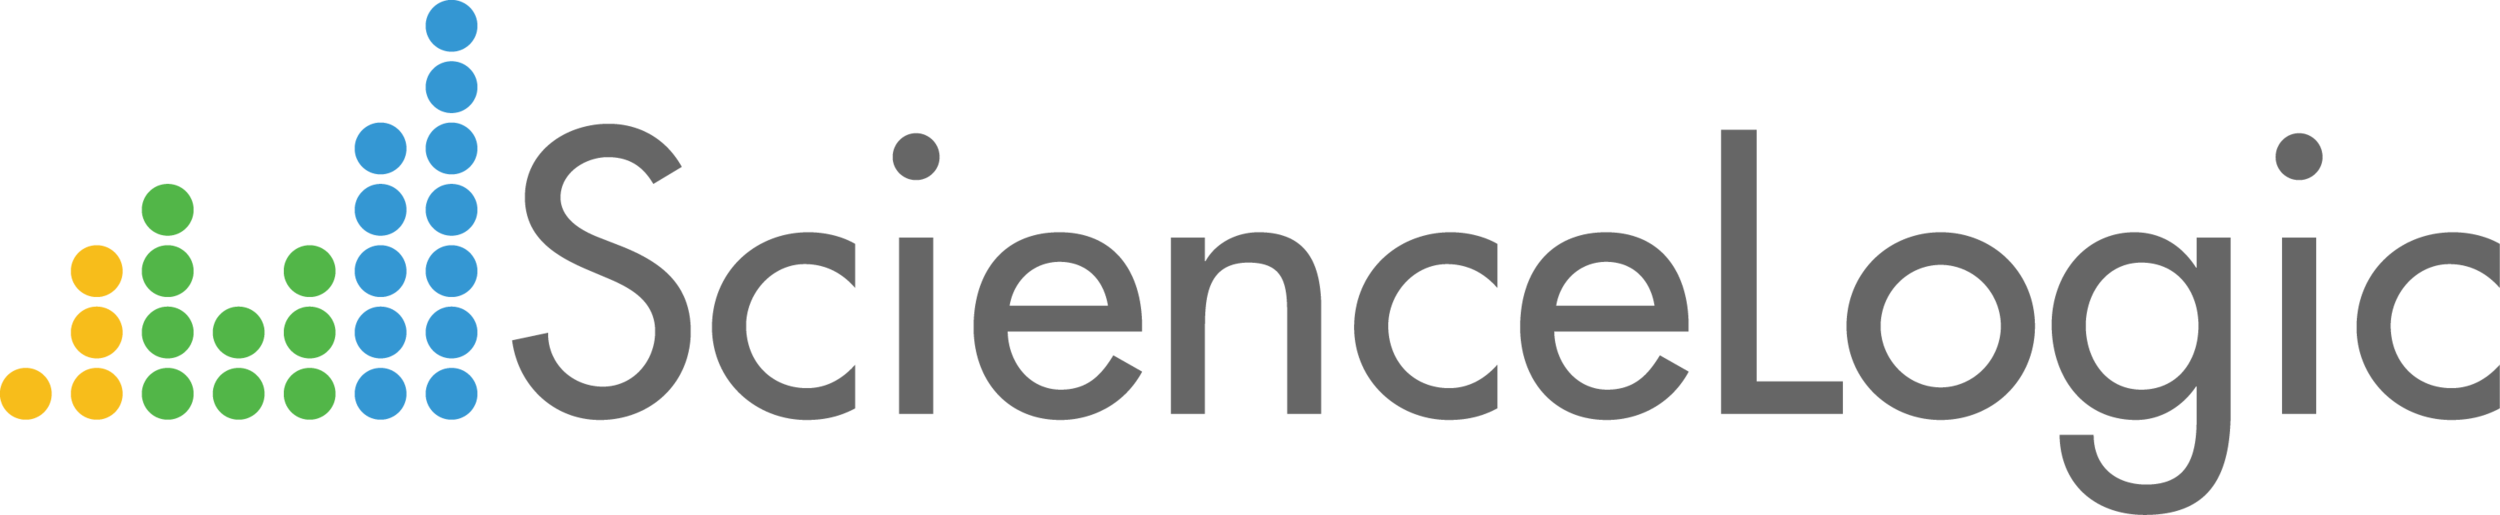 sciencelogic logo.png